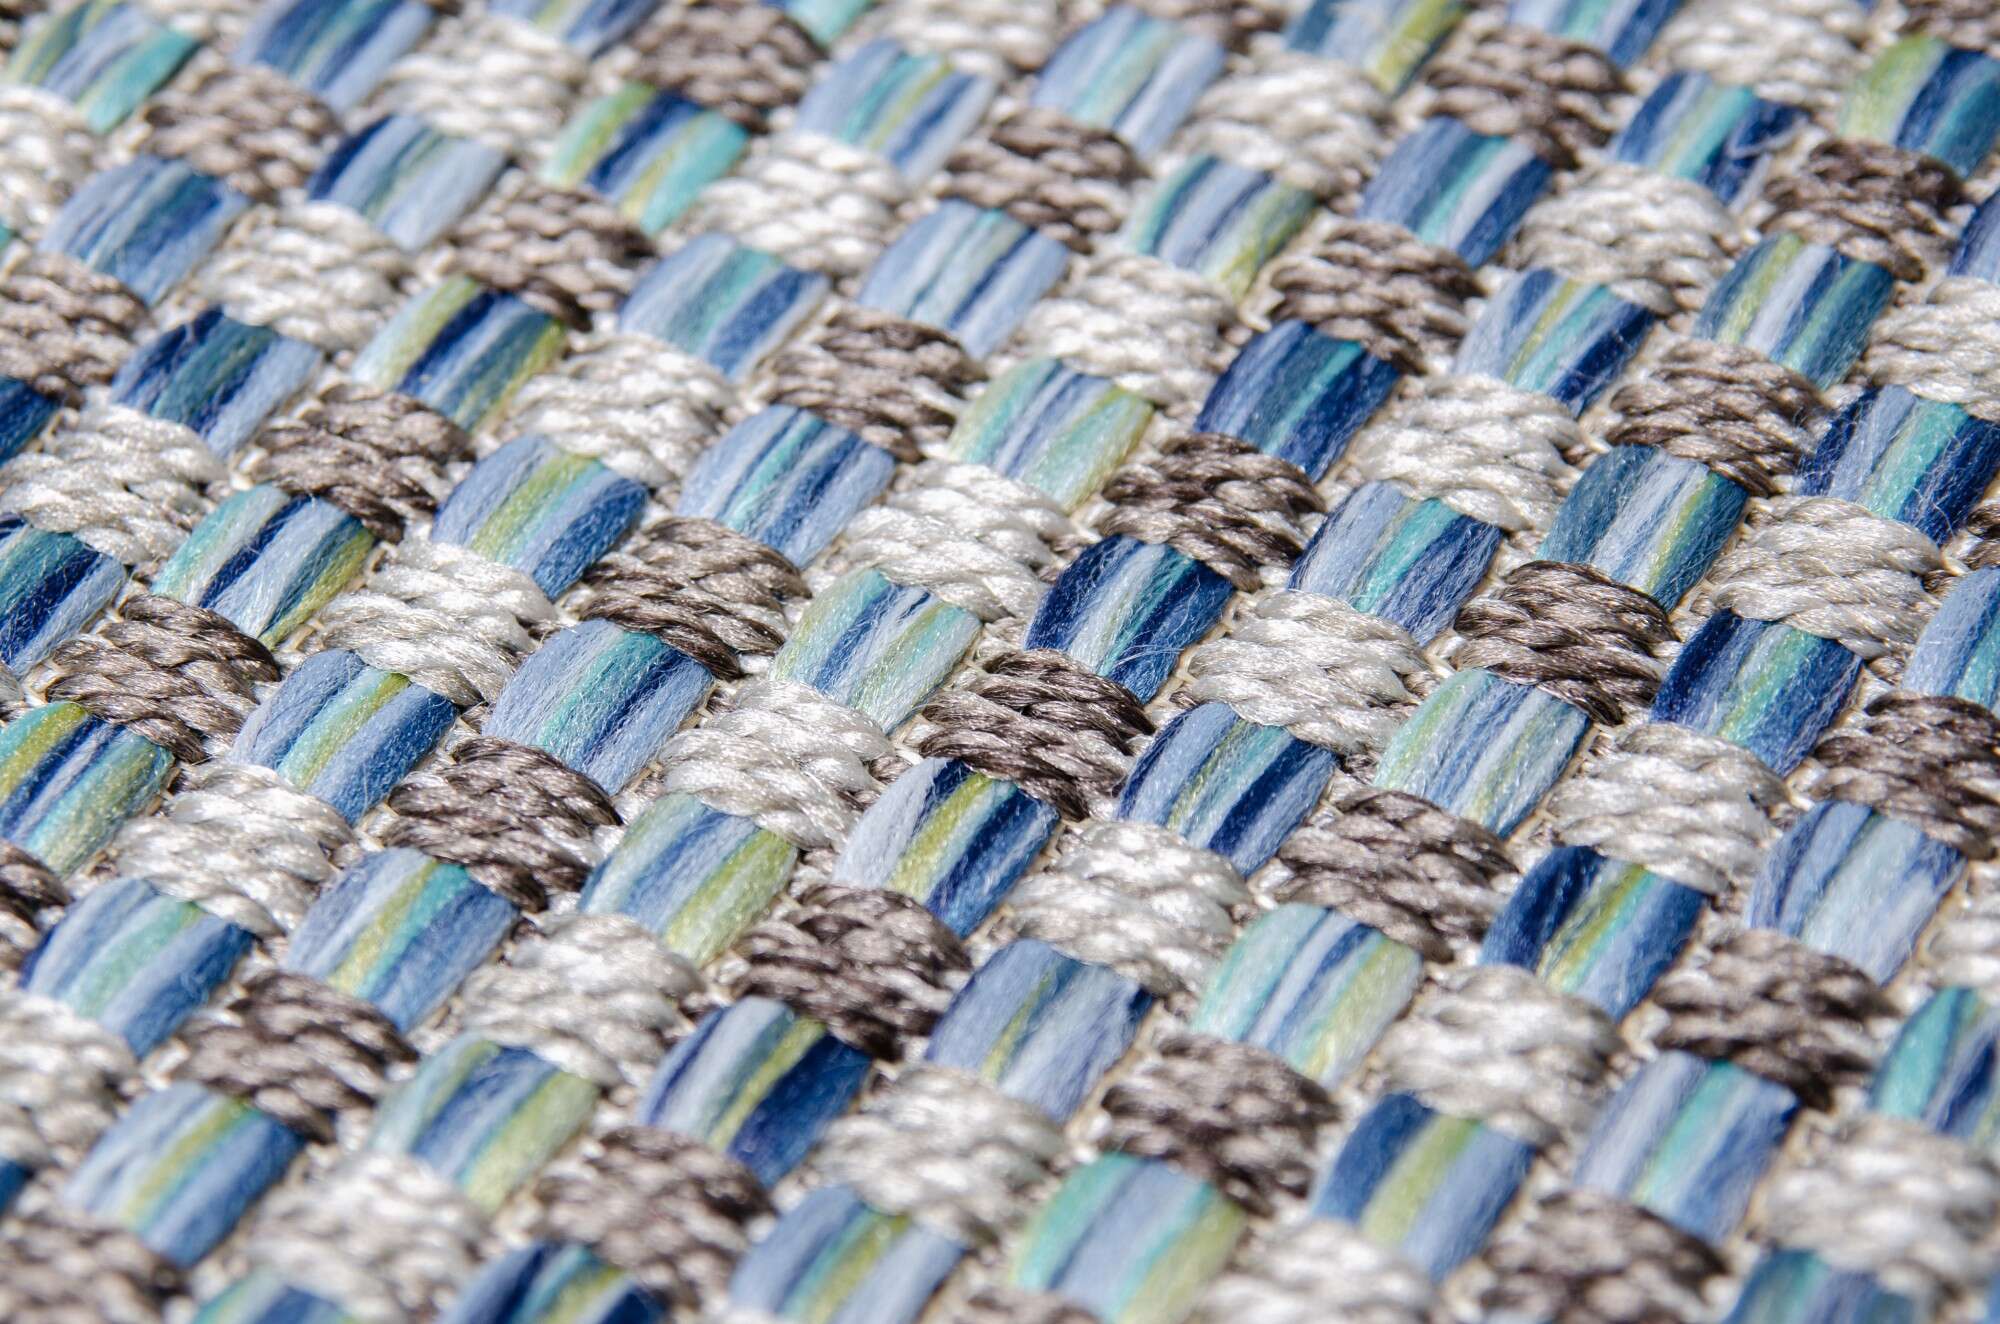 Outdoor Teppich Antigua blau mit Bordüre in grau